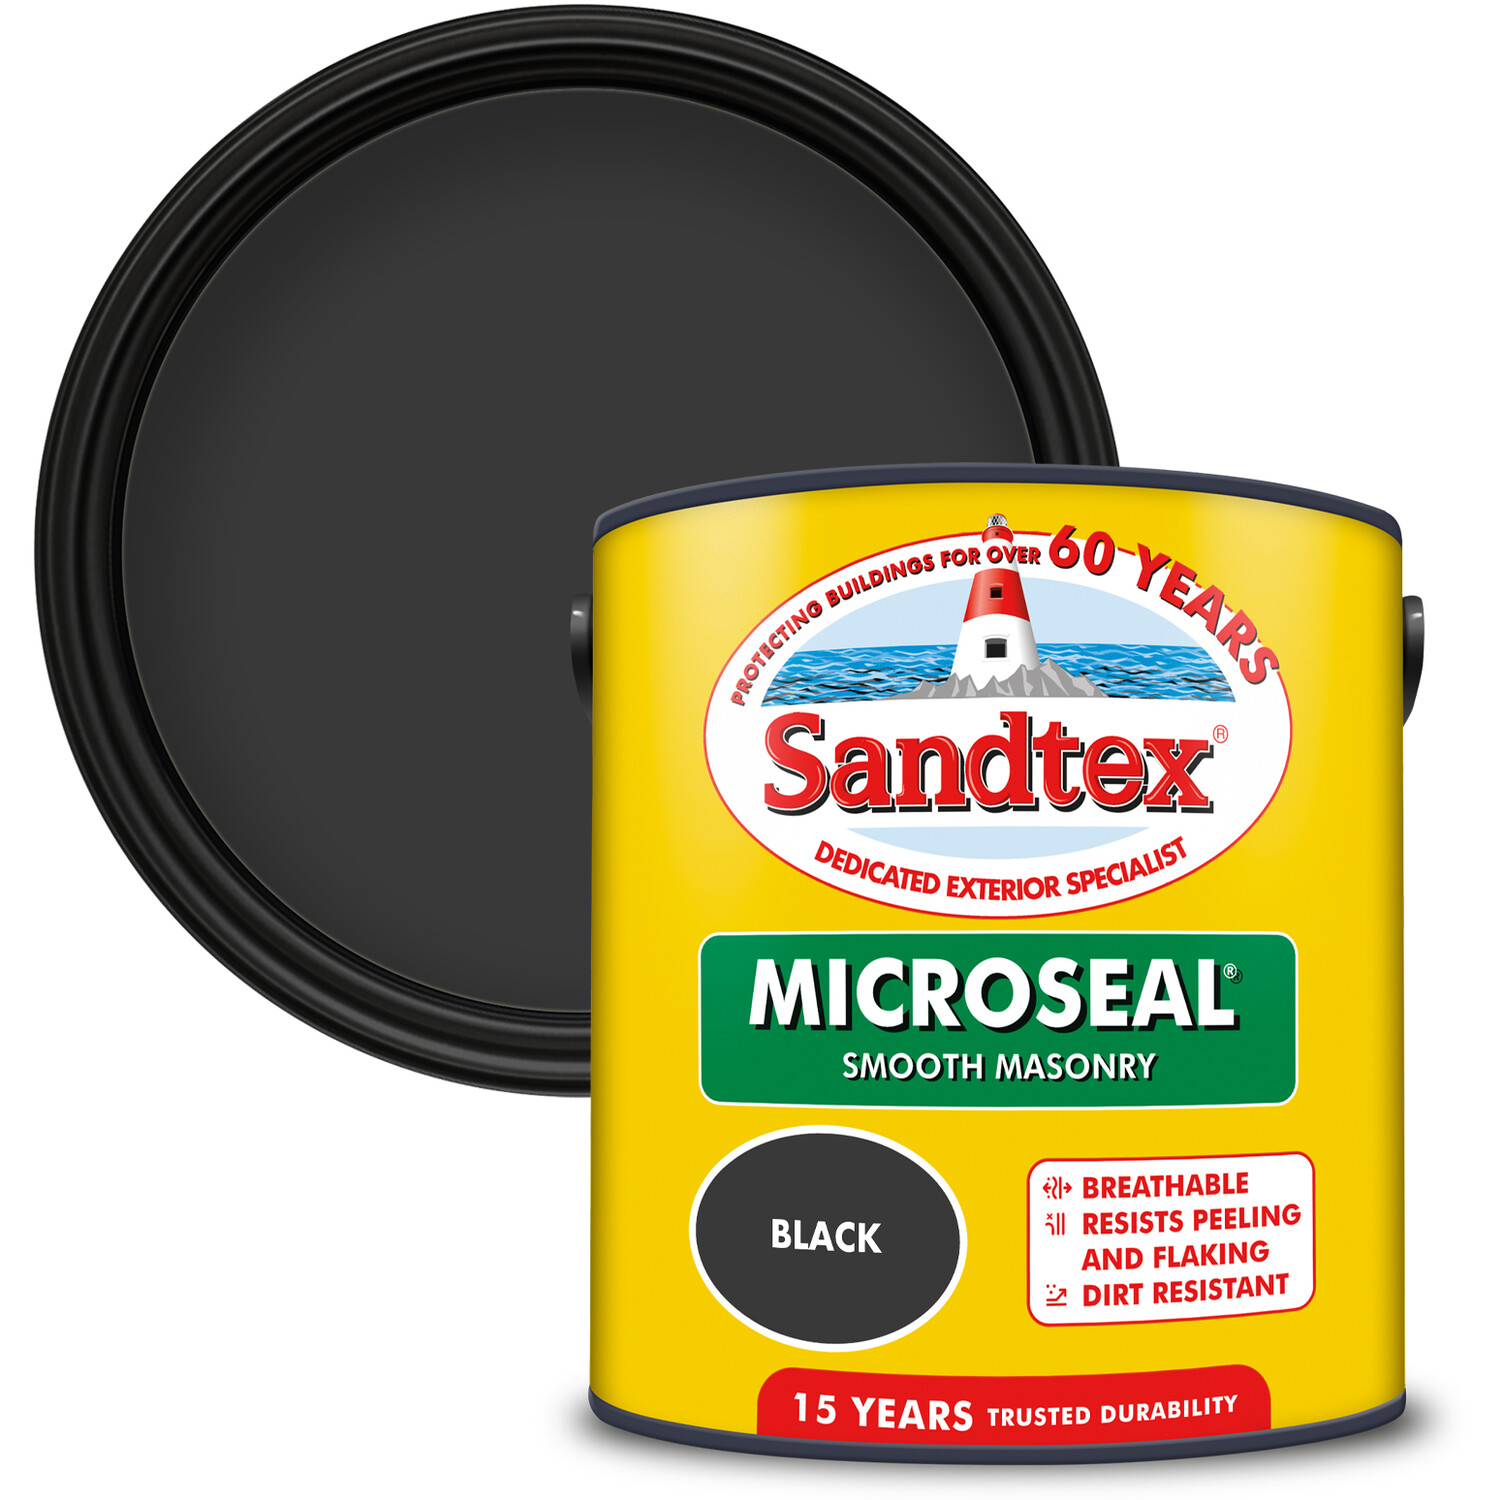 Sandtex Walls Black Microseal Smooth Masonry Matt Paint 5L Image 1